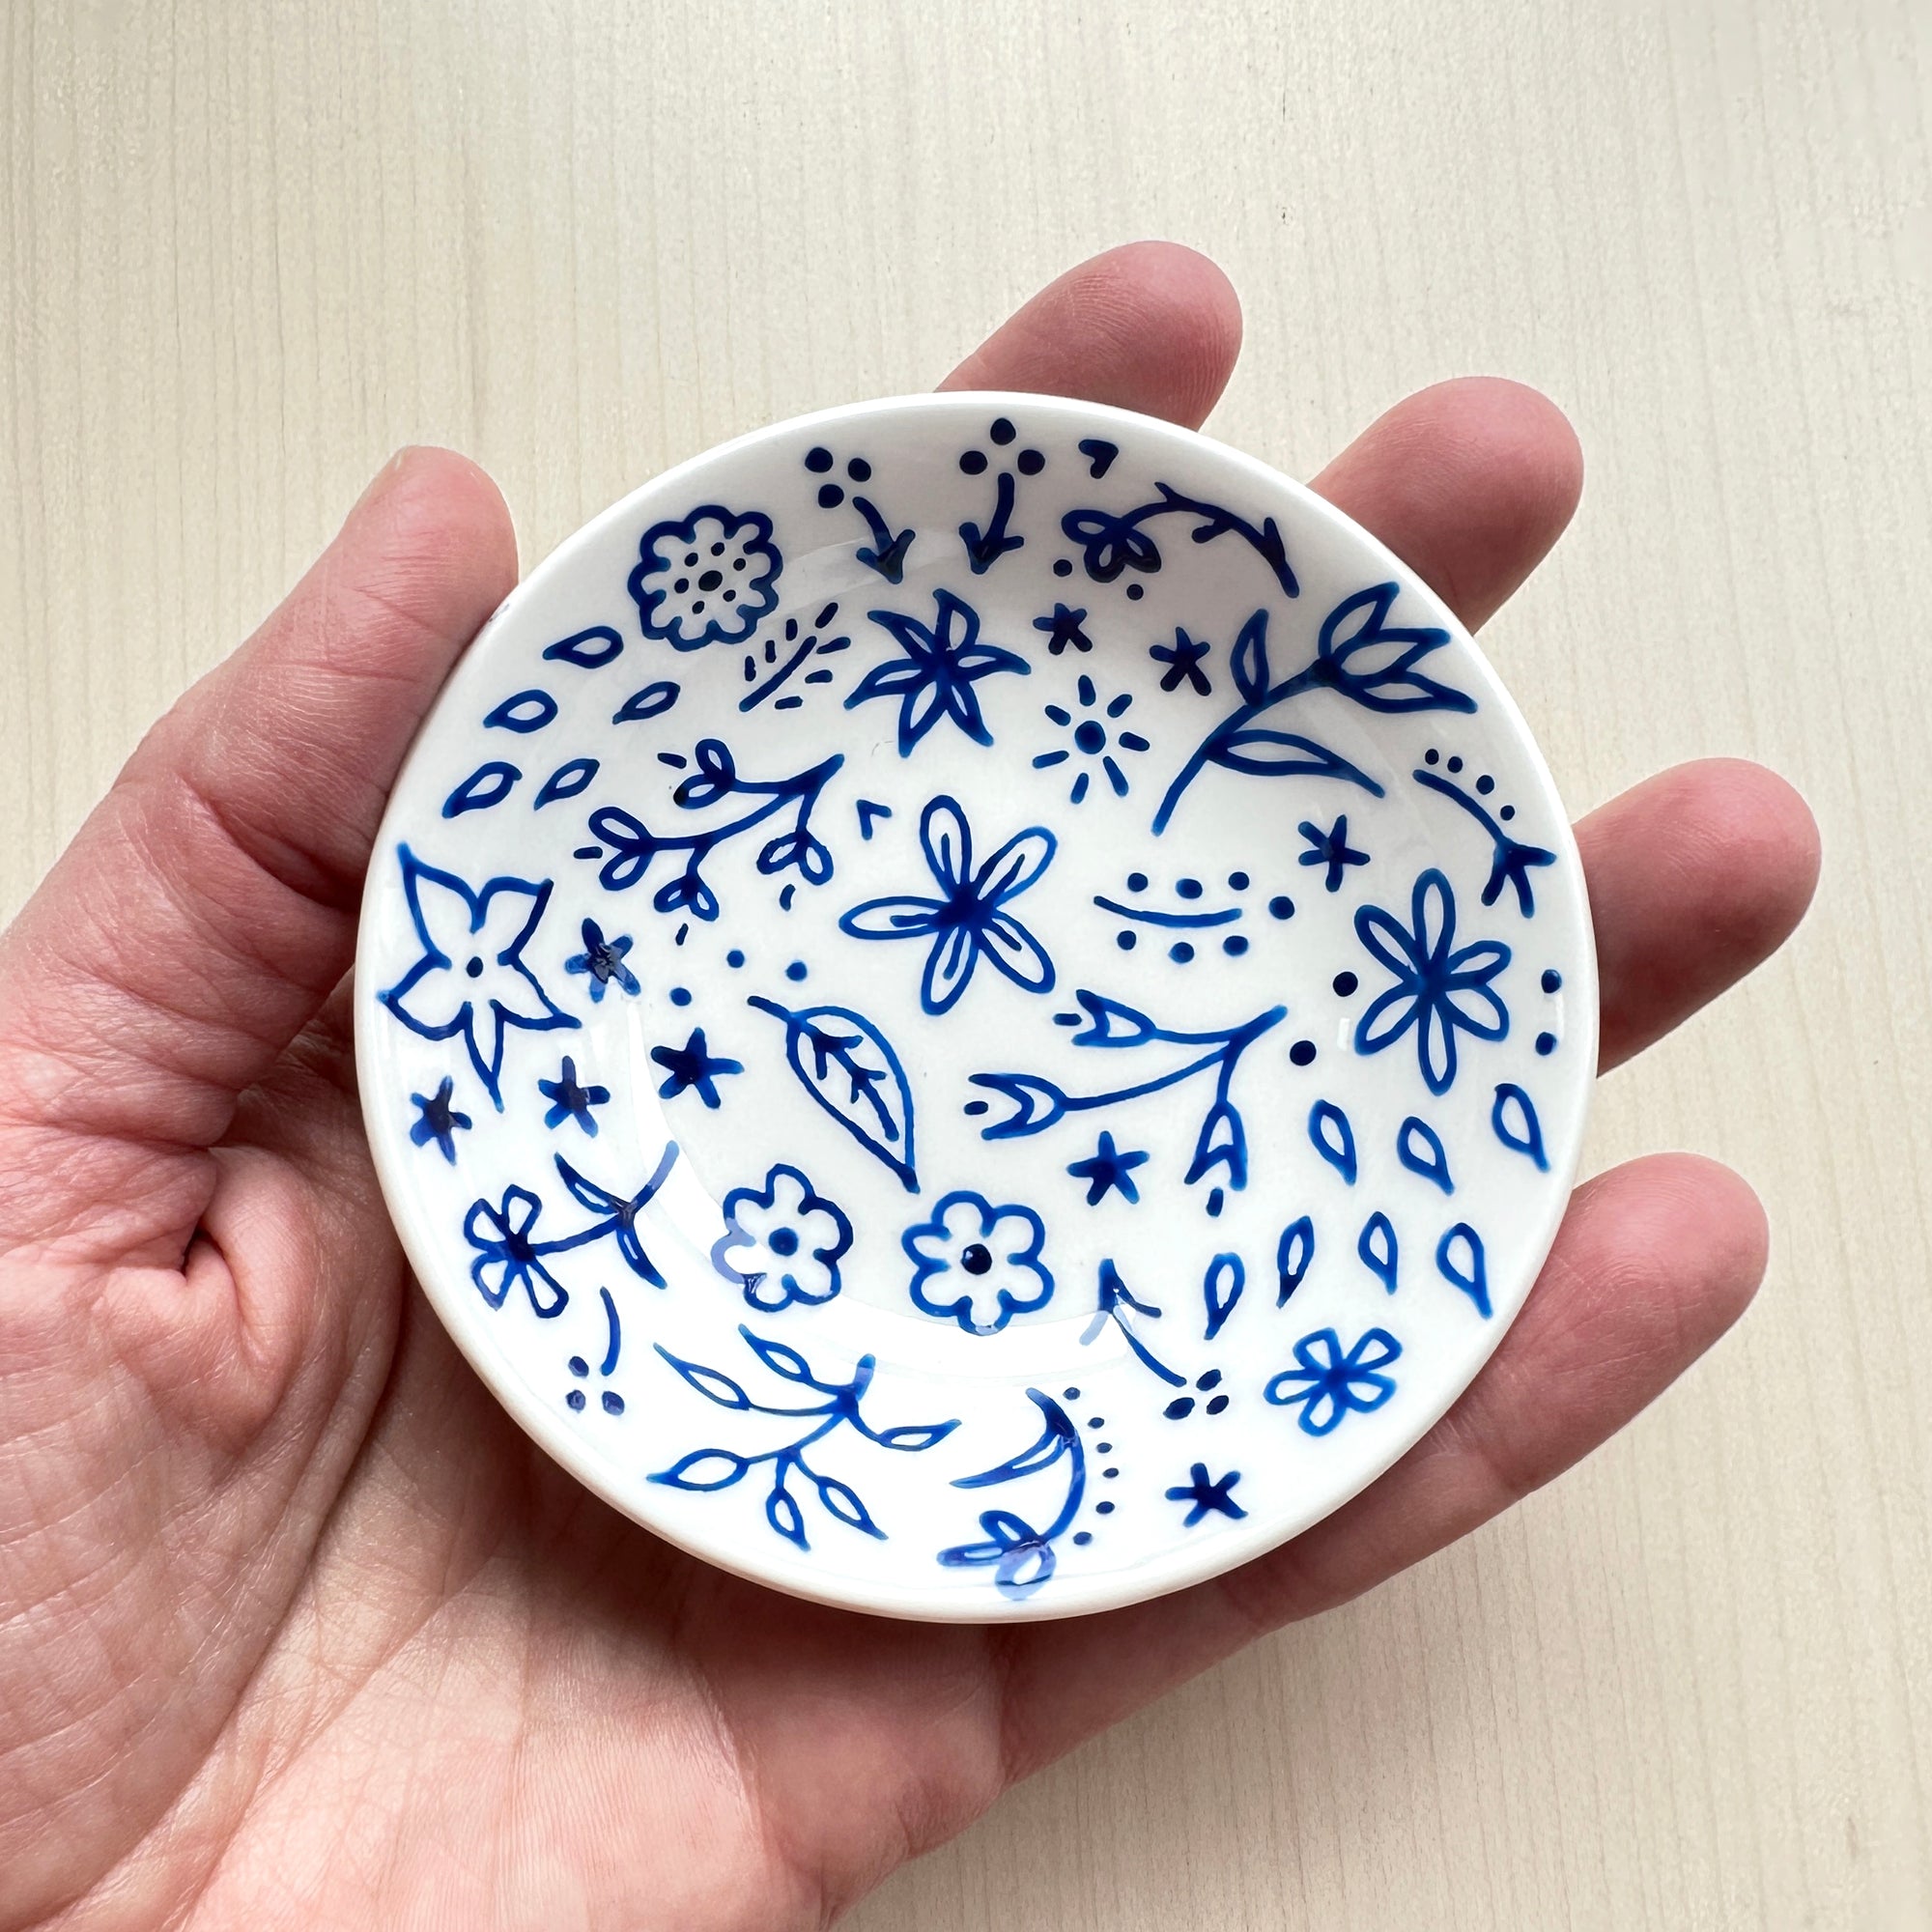 Blue Floral 3 - Hand Painted Porcelain Round Bowl